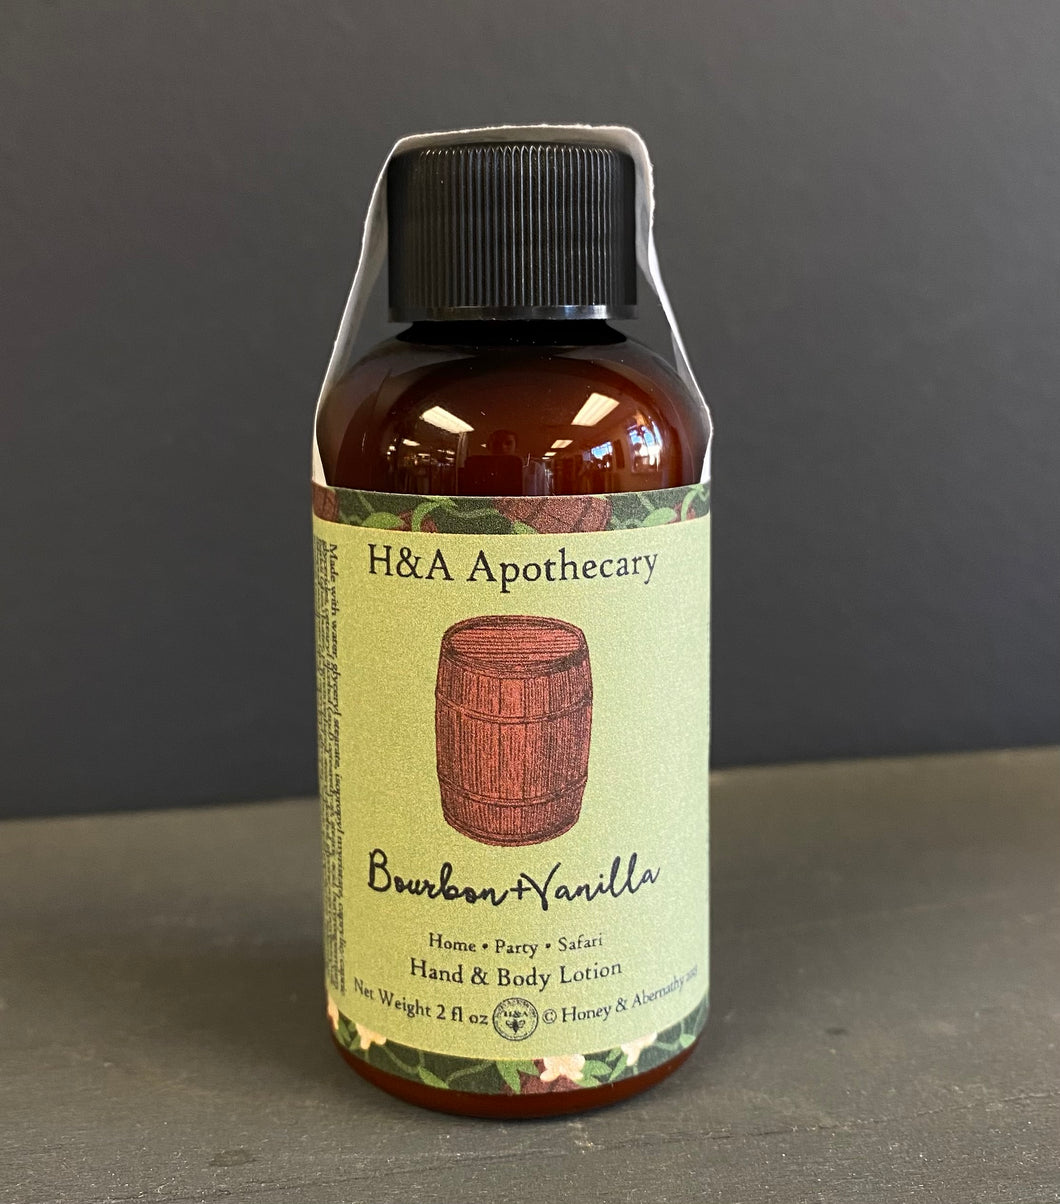 H&A Apothecary Bourbon Vanilla Hand & Body Lotion